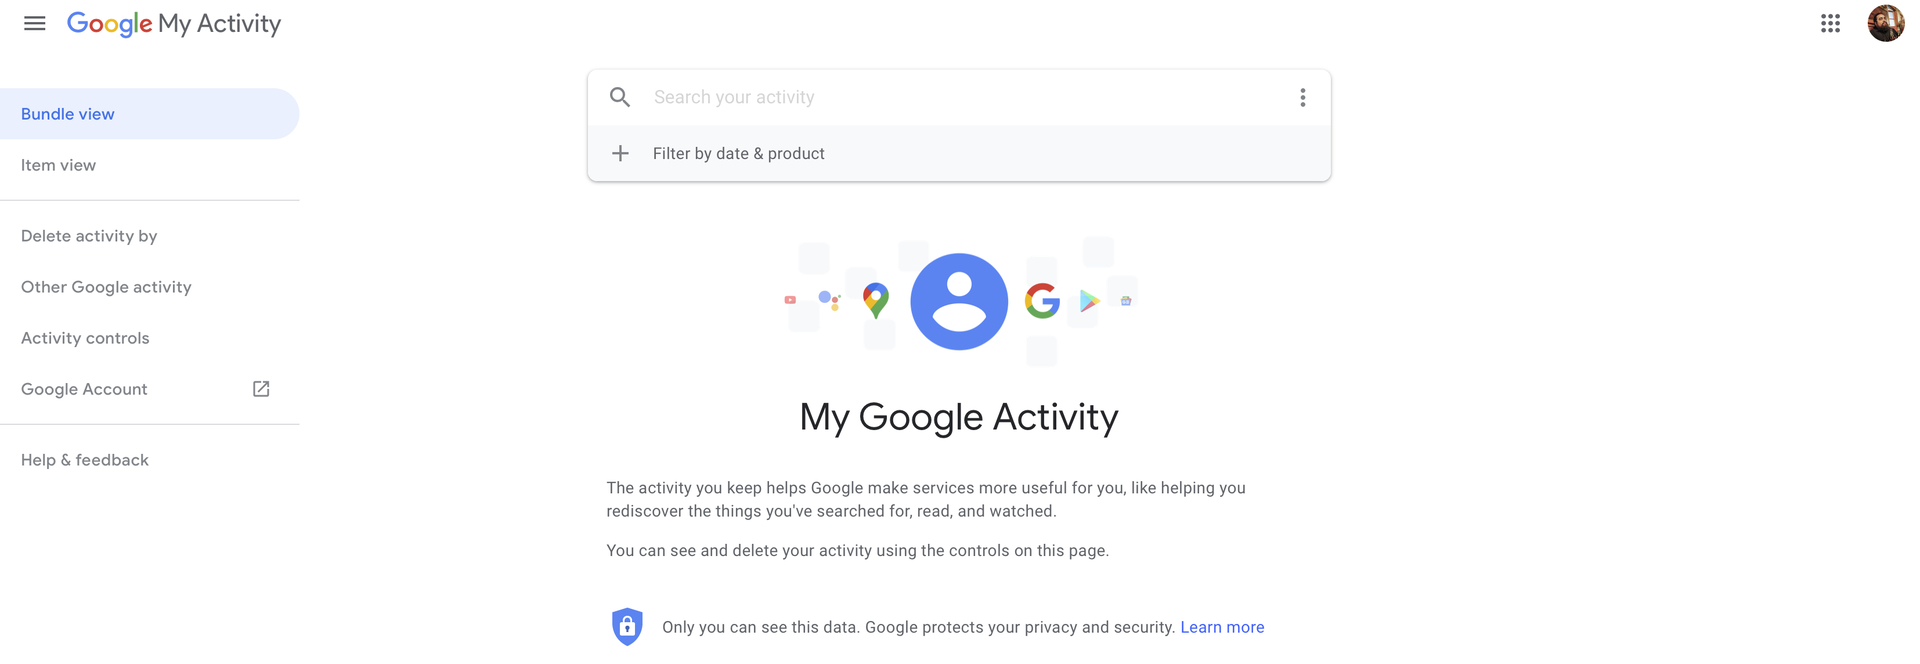 Google My Activity page